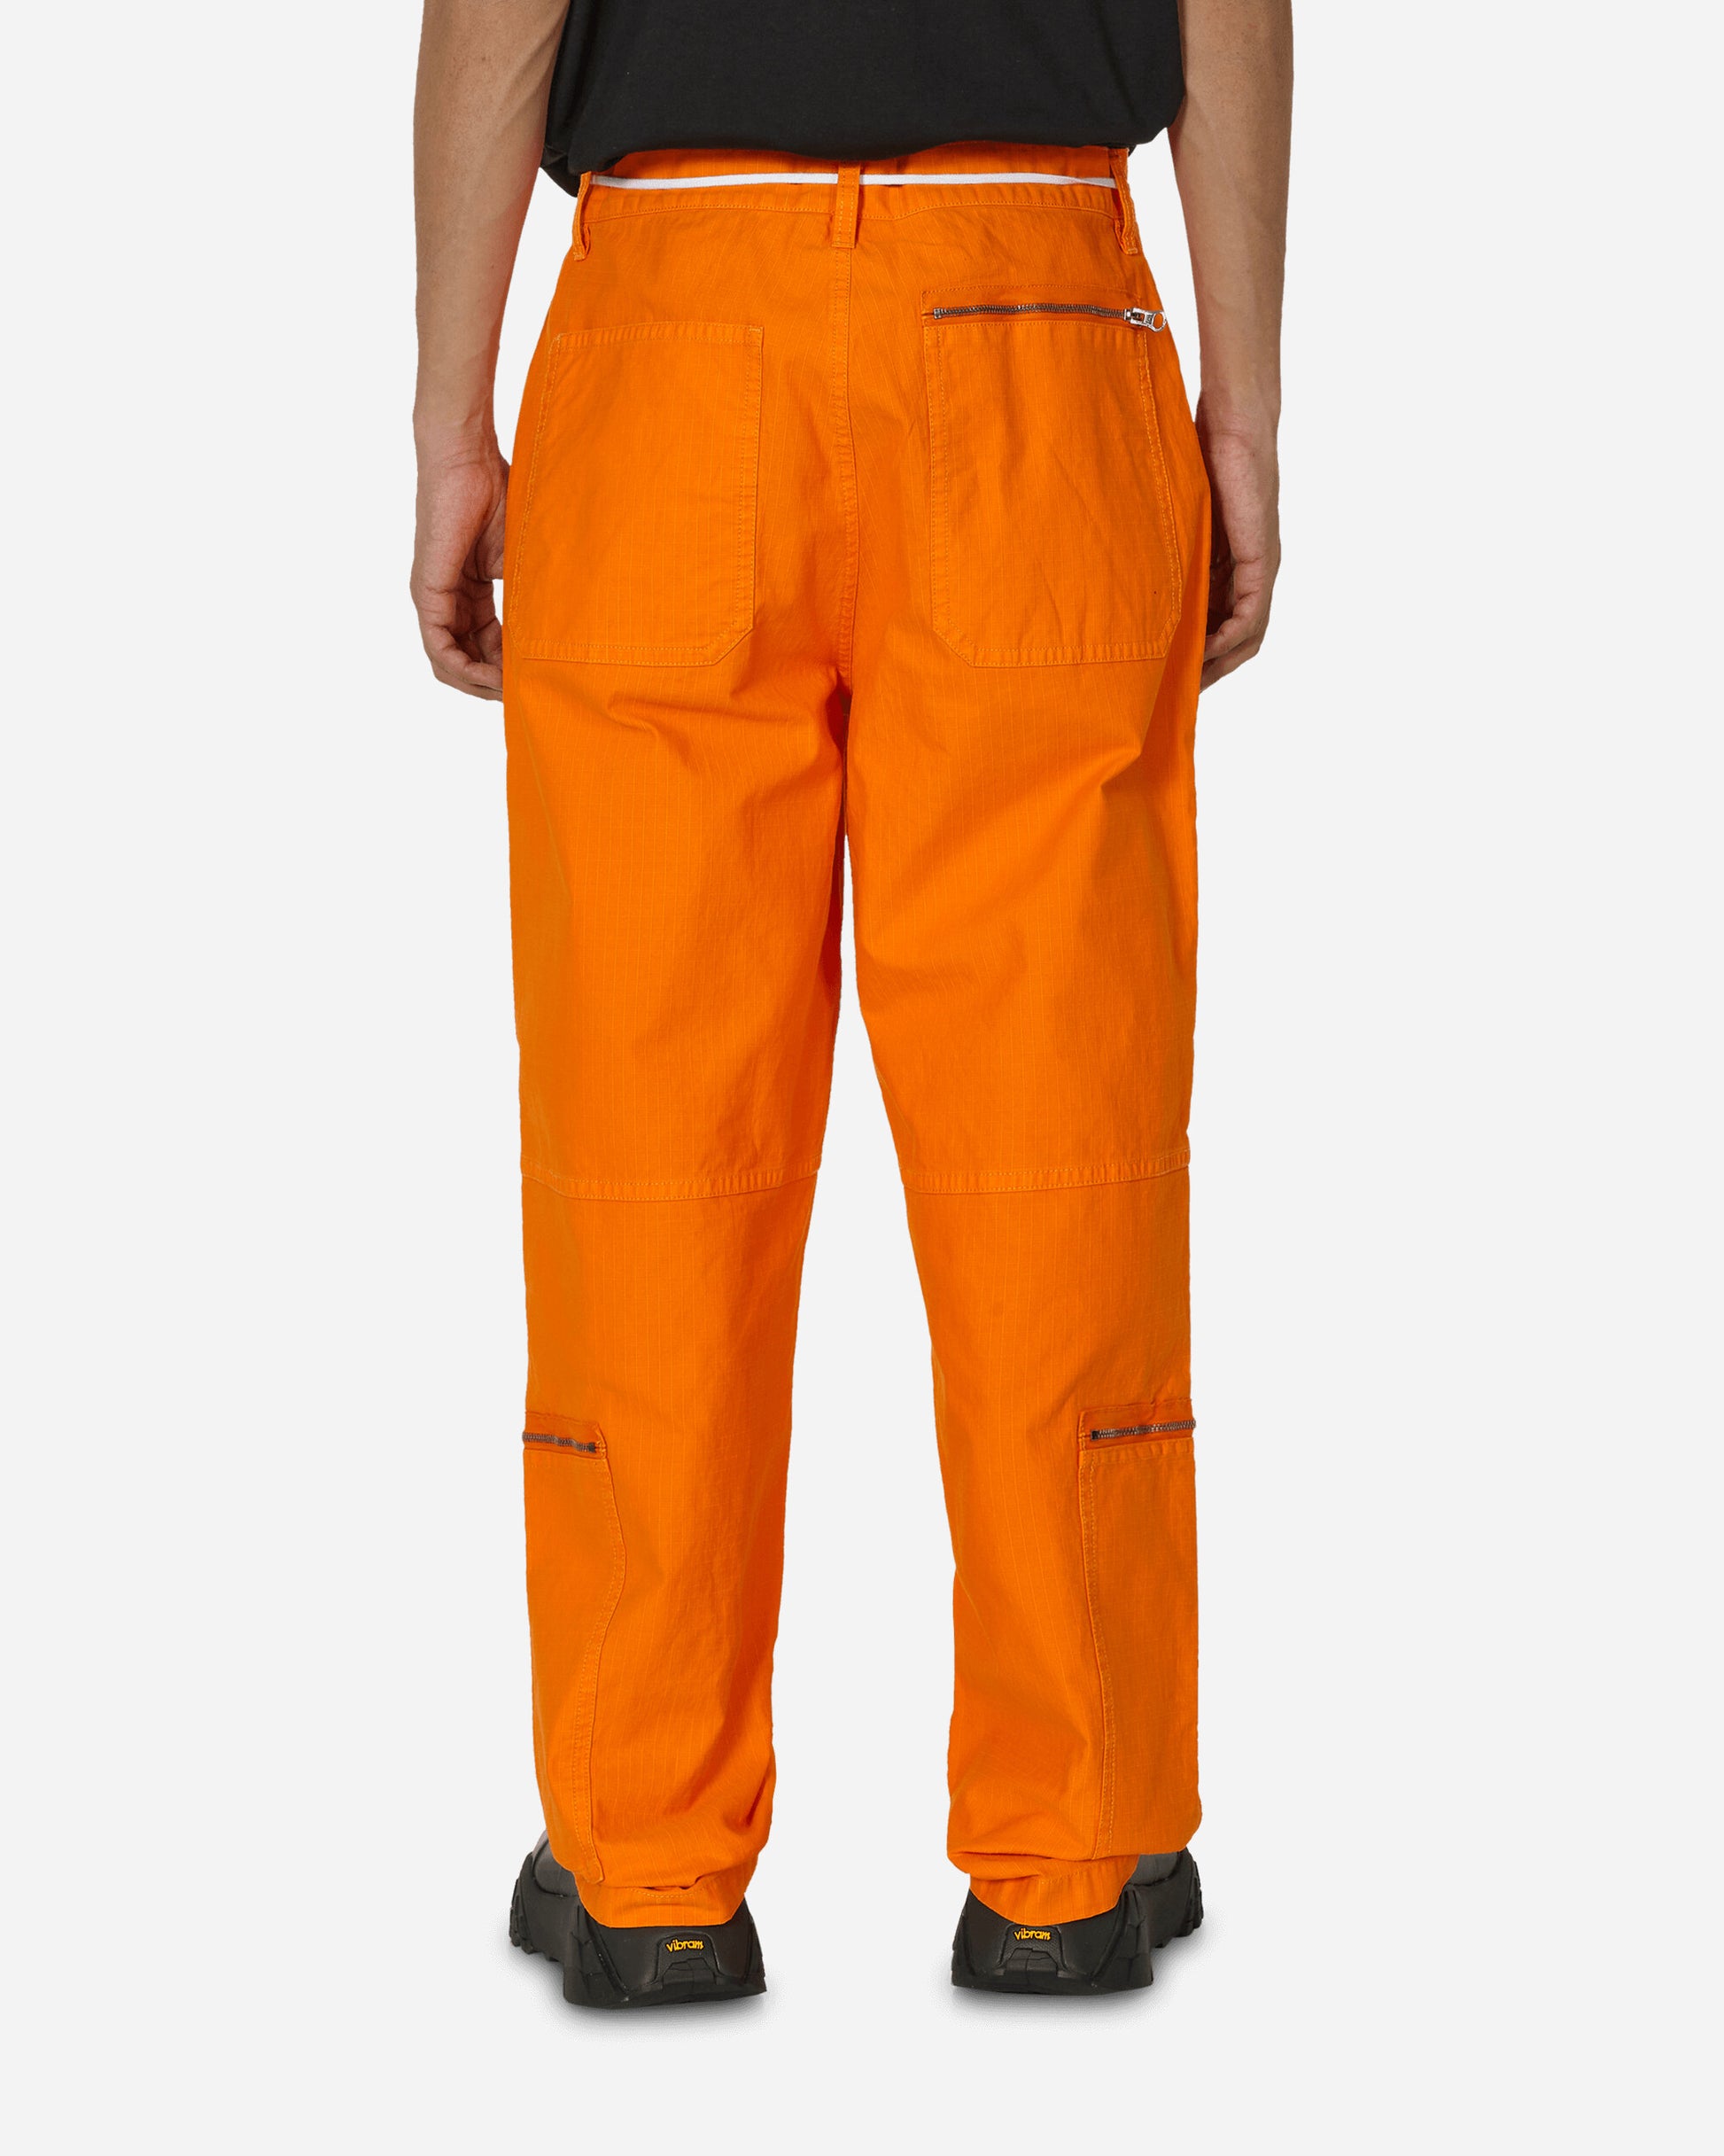 Stüssy Flight Pant Ripstop Pig. Dyed Orange Pants Casual 116655 0602